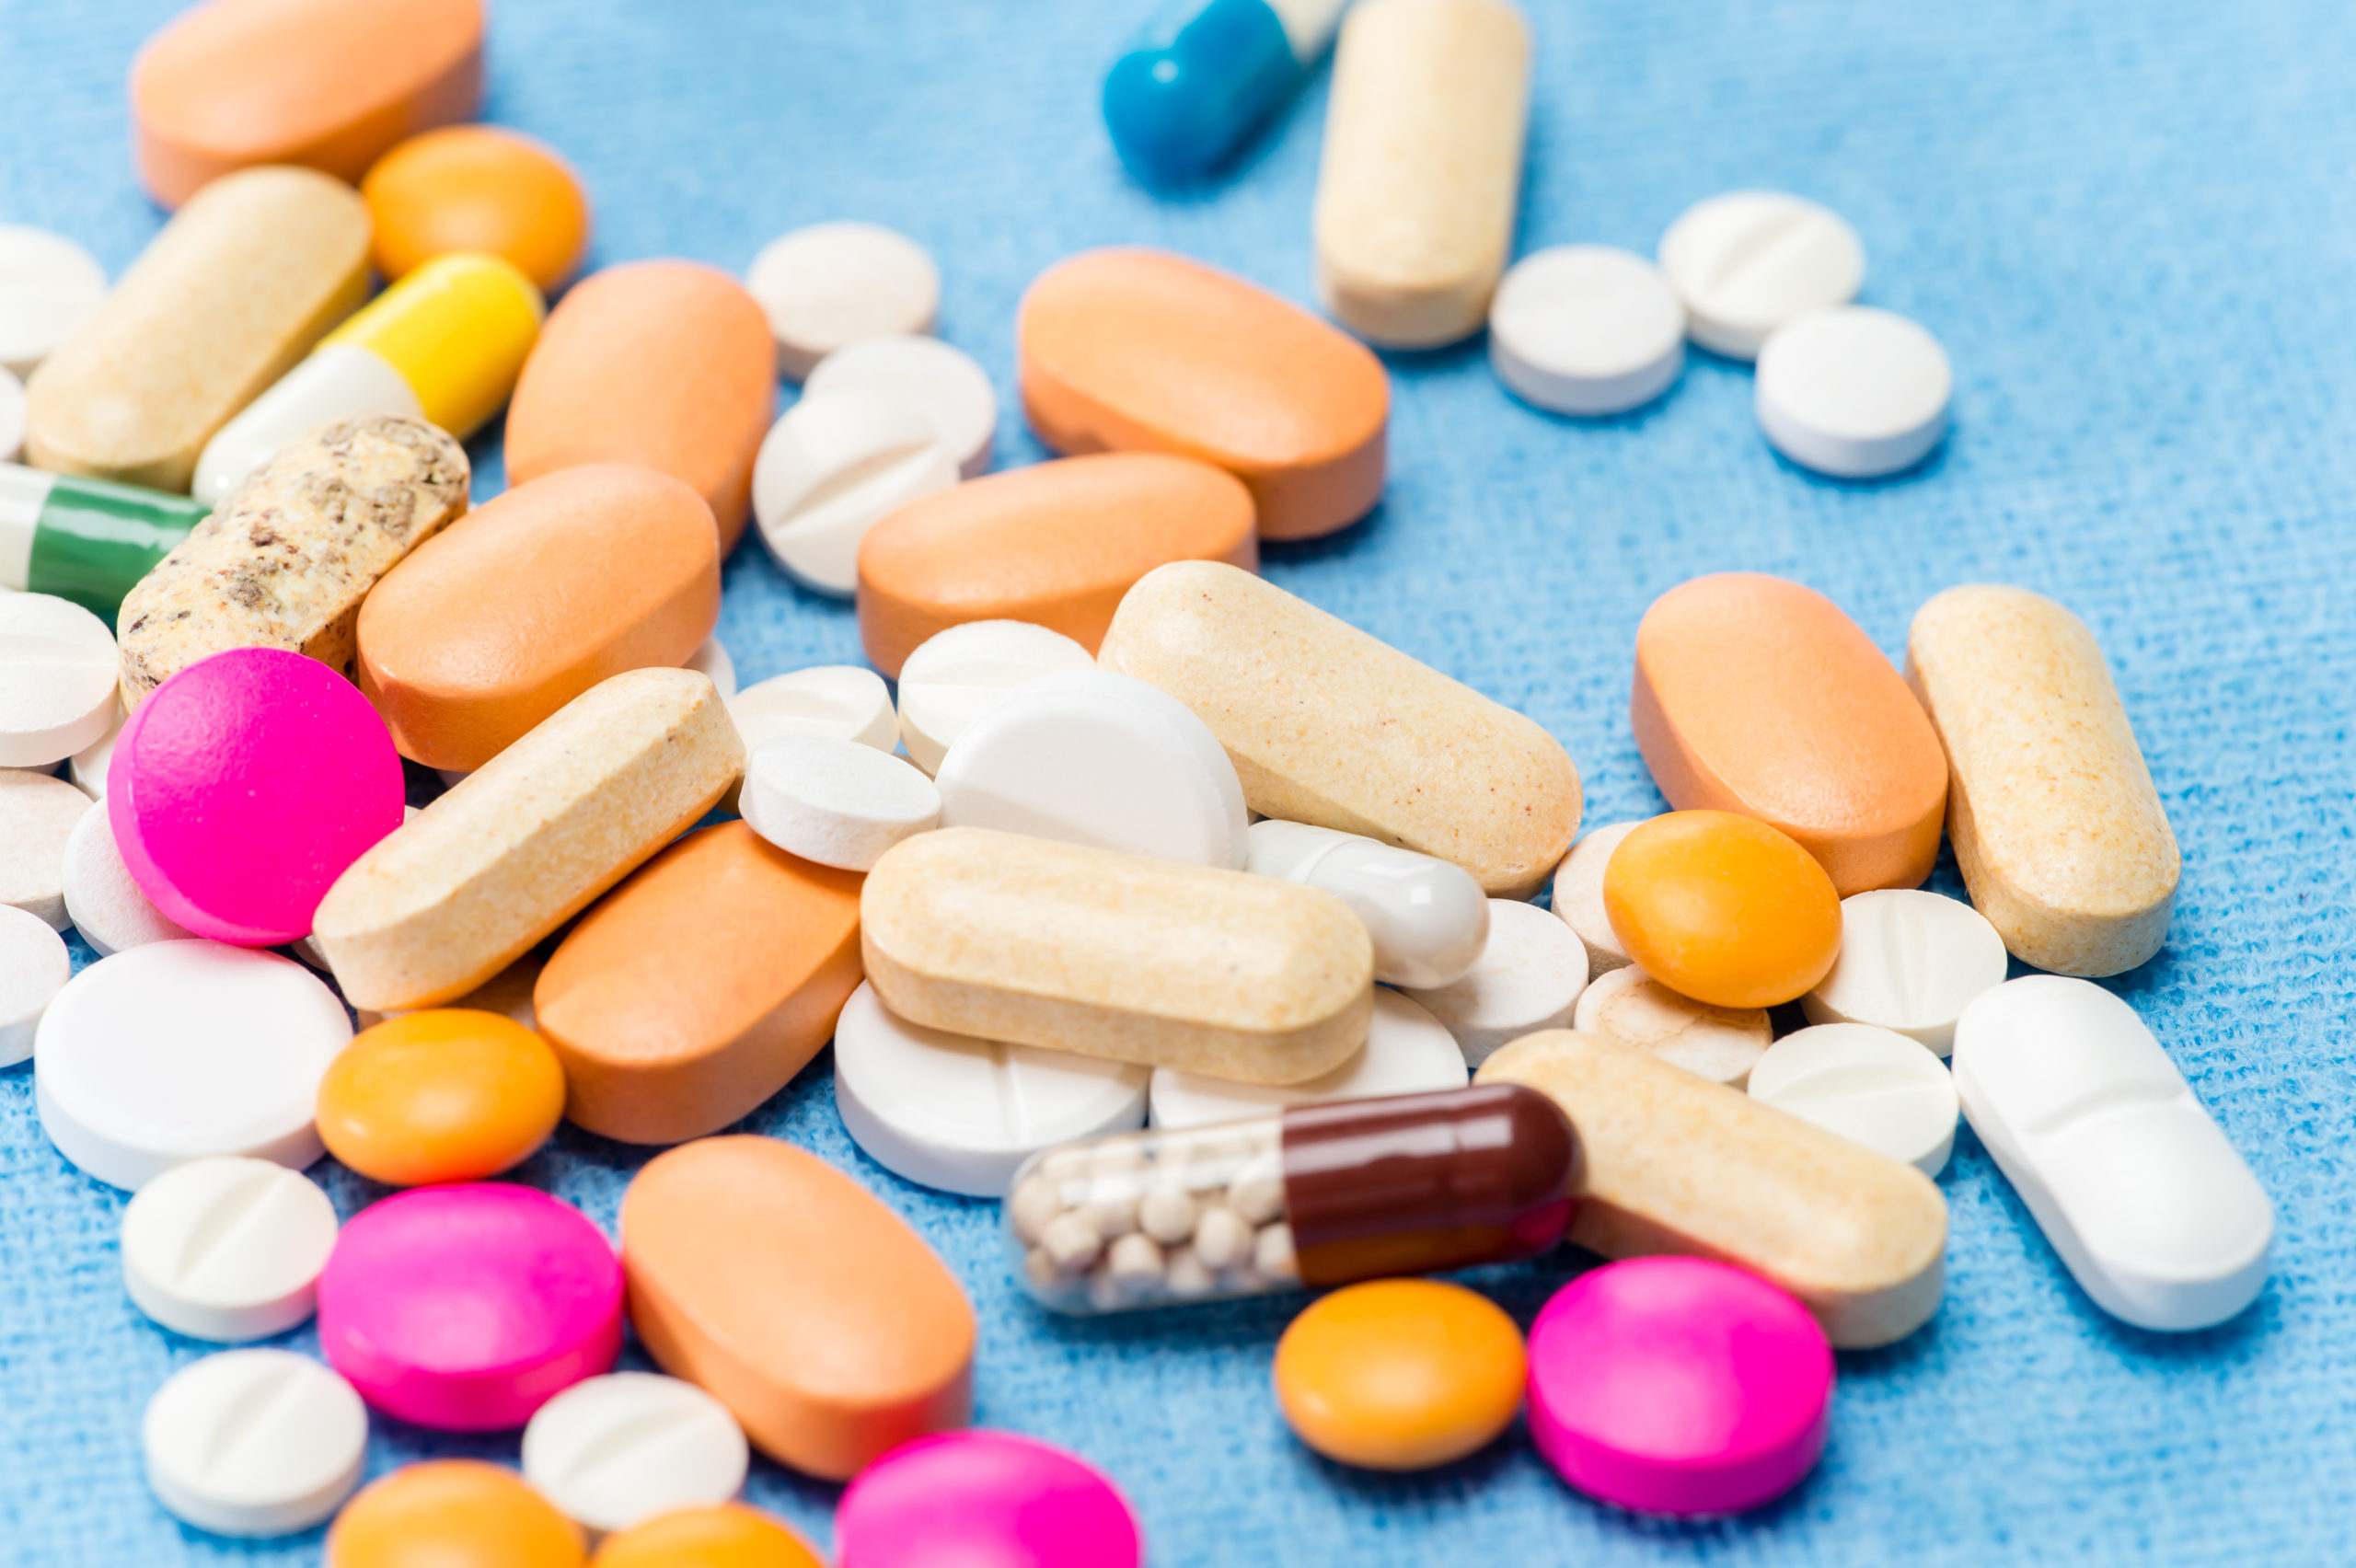 8 Signs of Prescription Drug Addiction